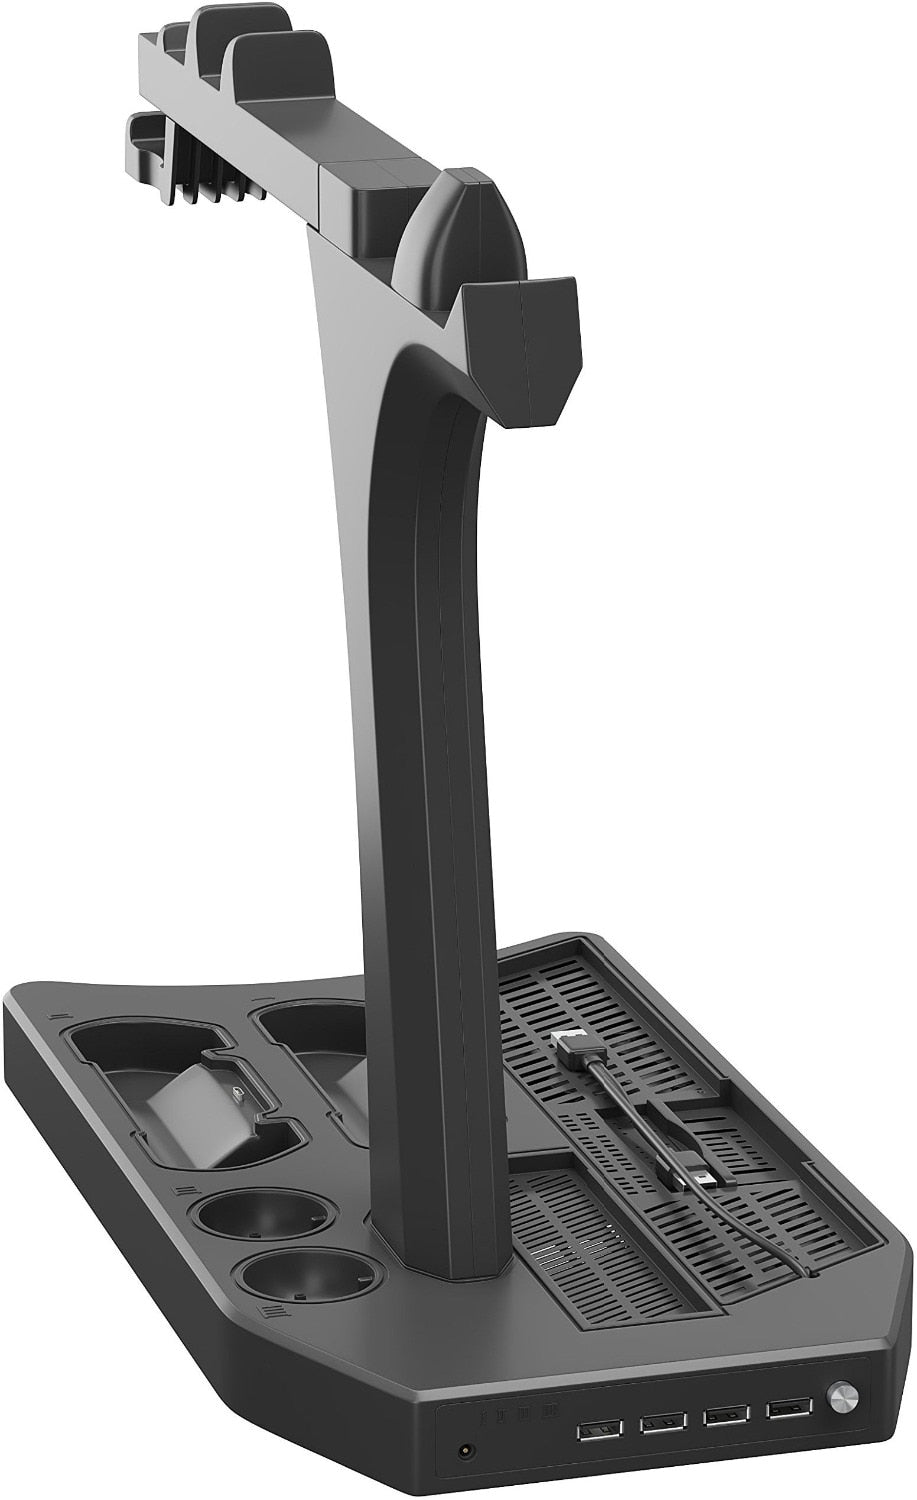 PS4 Pro Slim Vertical Stand Cooler Fan Charger Display Holder Base PS4 VR Playstation 4 PSVR Showcase Move Case